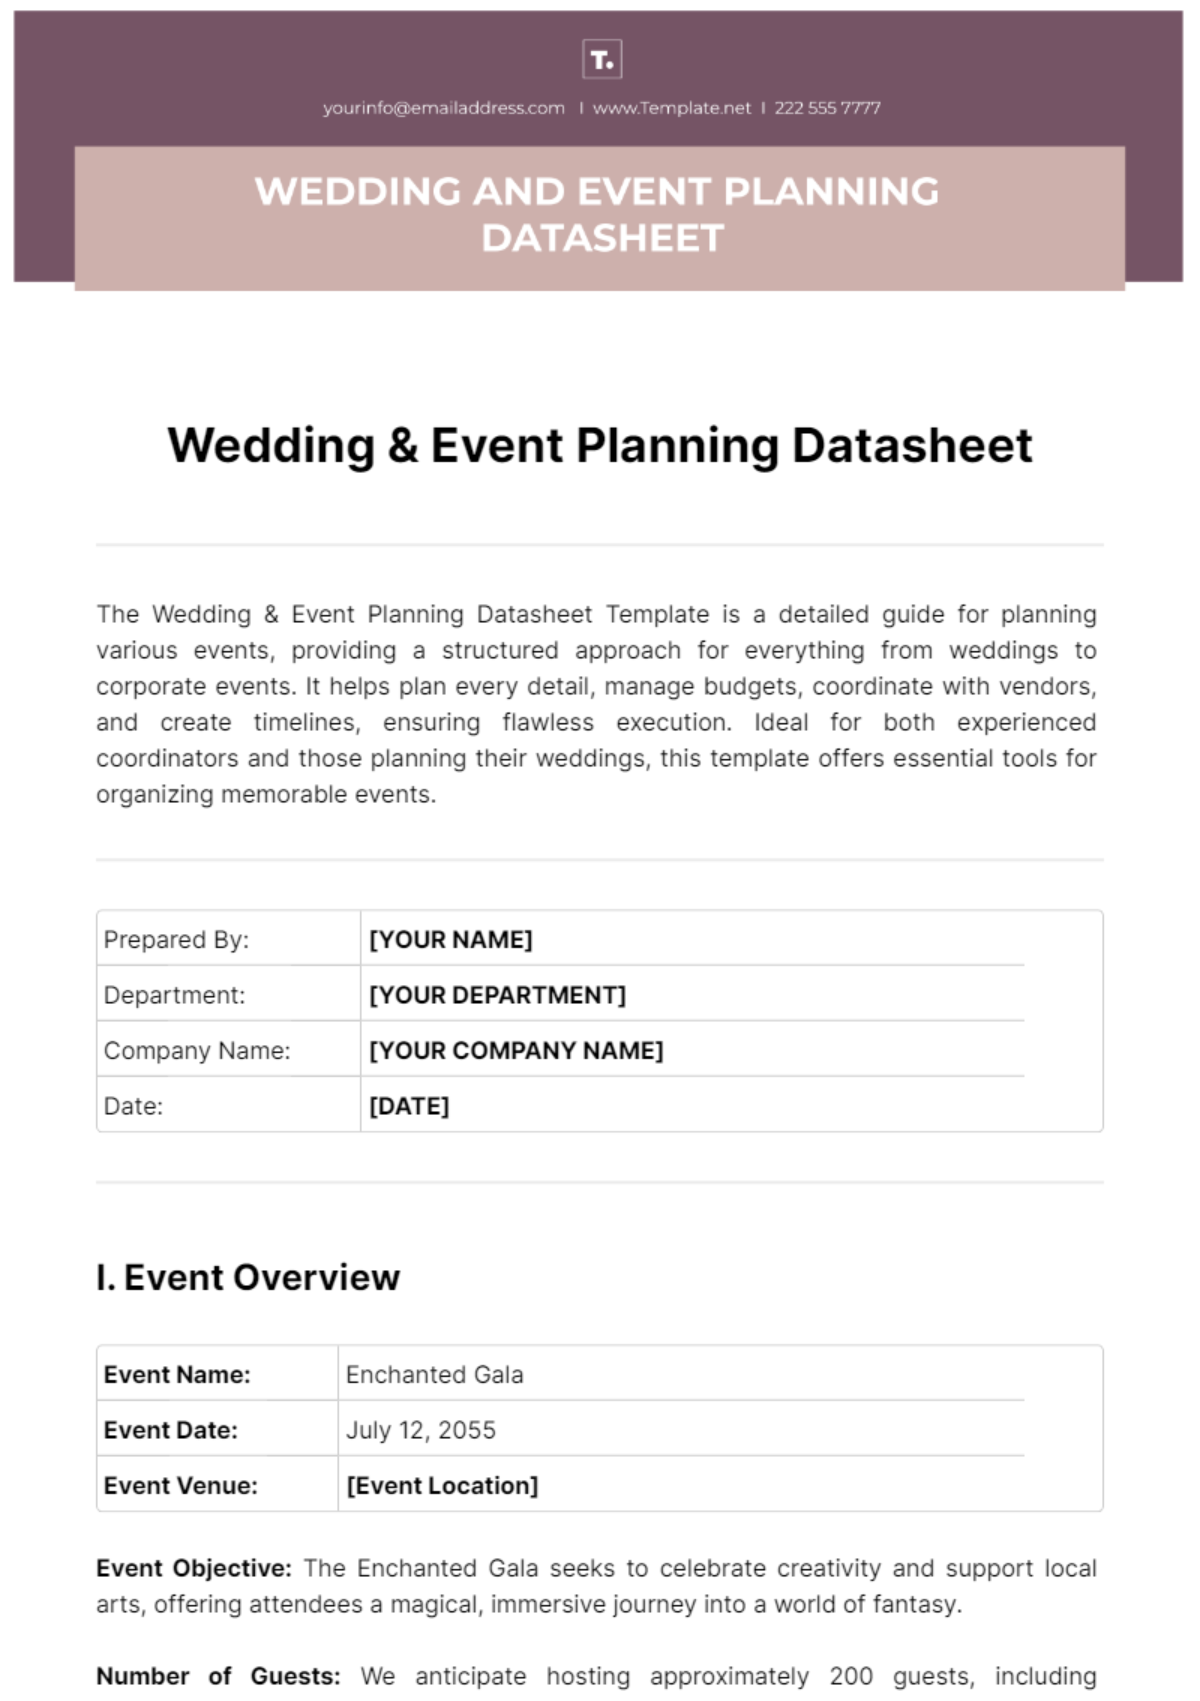 Free Wedding & Event Planning Datasheet Template